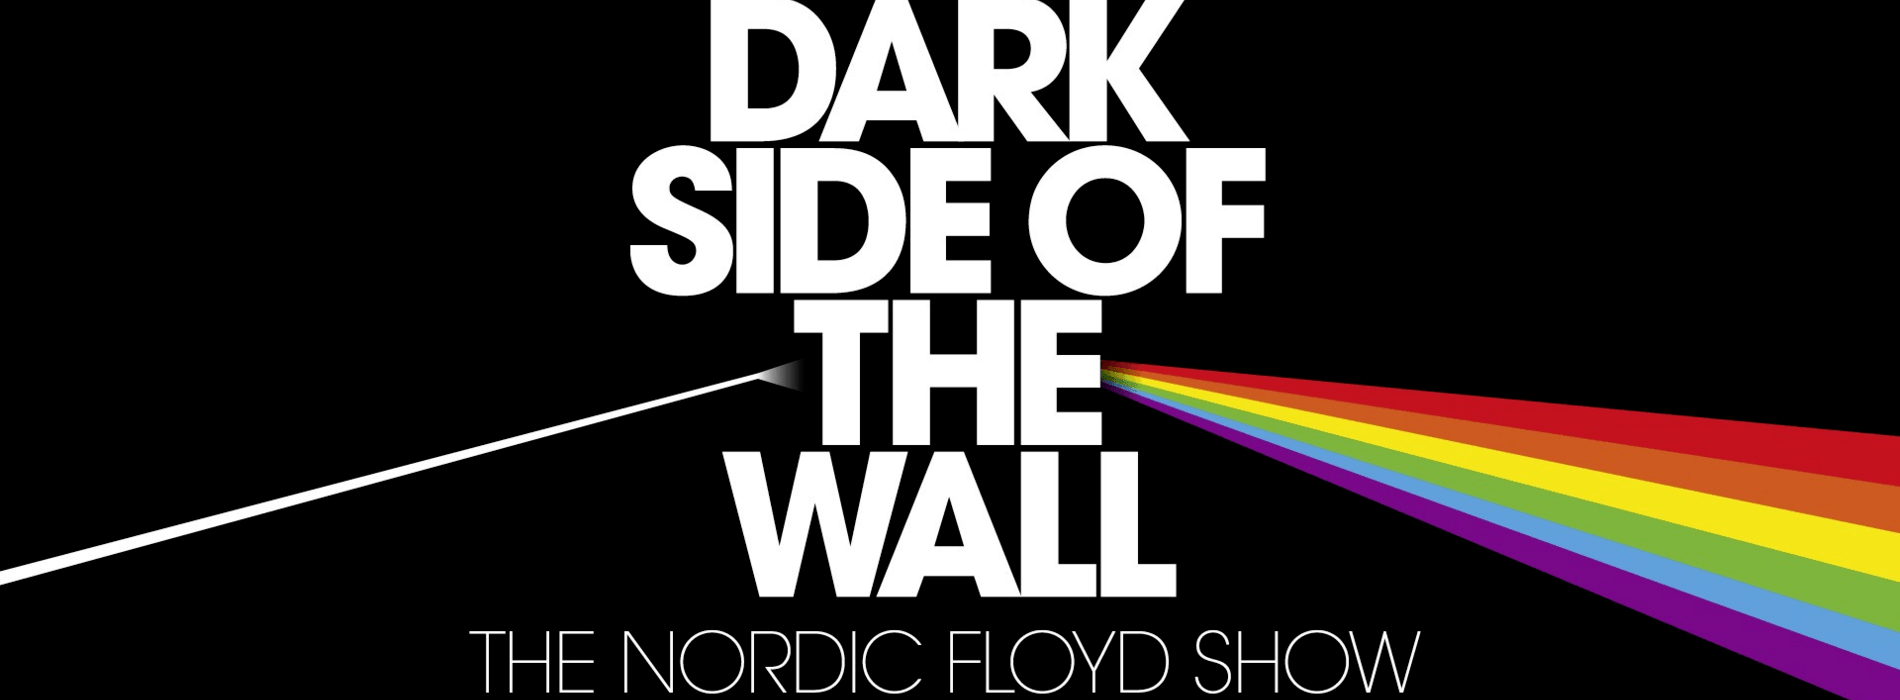 DARK SIDE OF THE WALL – THE NORDIC FLOYD SHOW (Grieghallen, Bergen) –